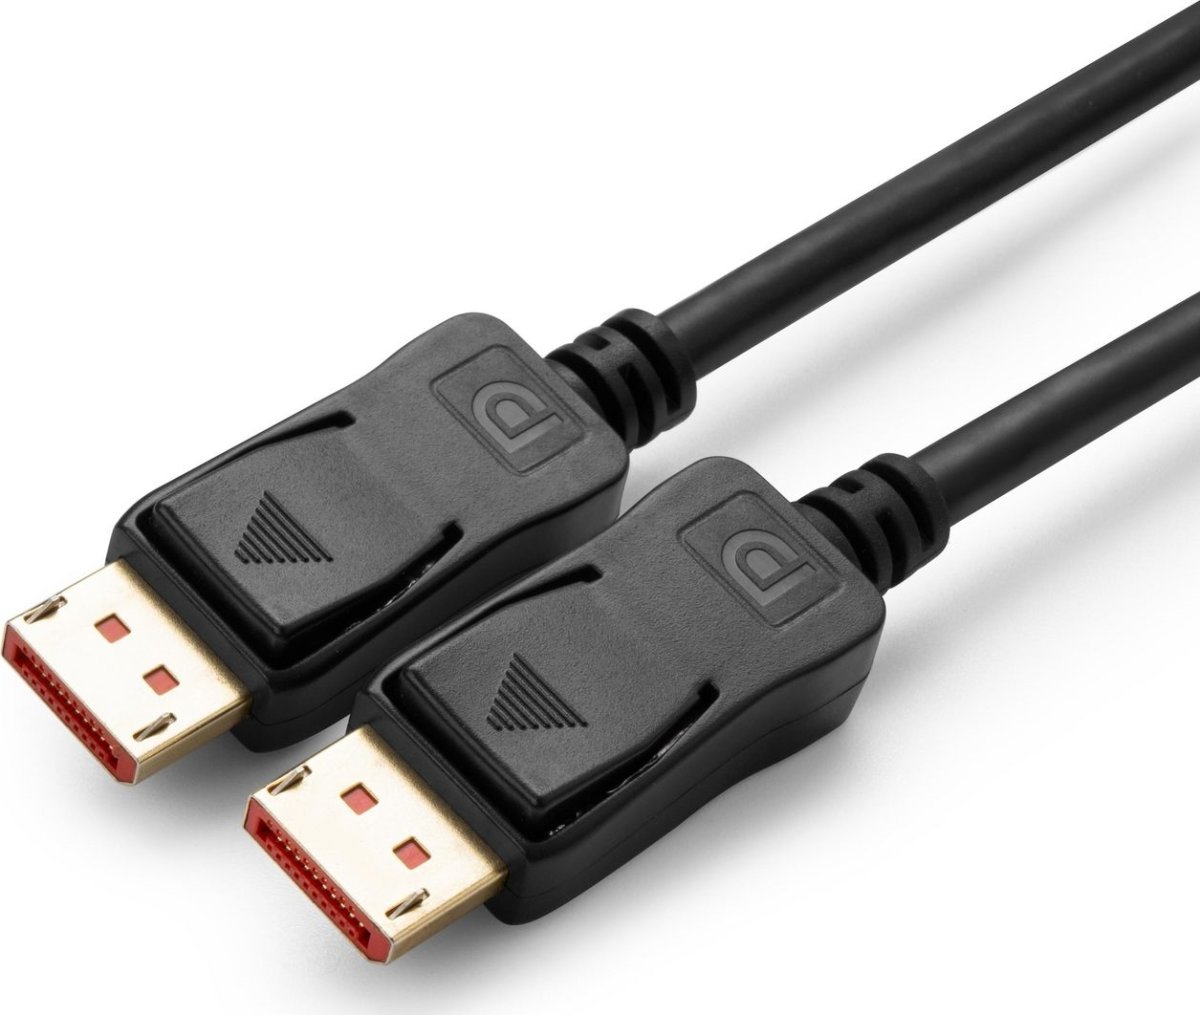 MicroConnect 8K DisplayPort 1.4 kabel, 3m